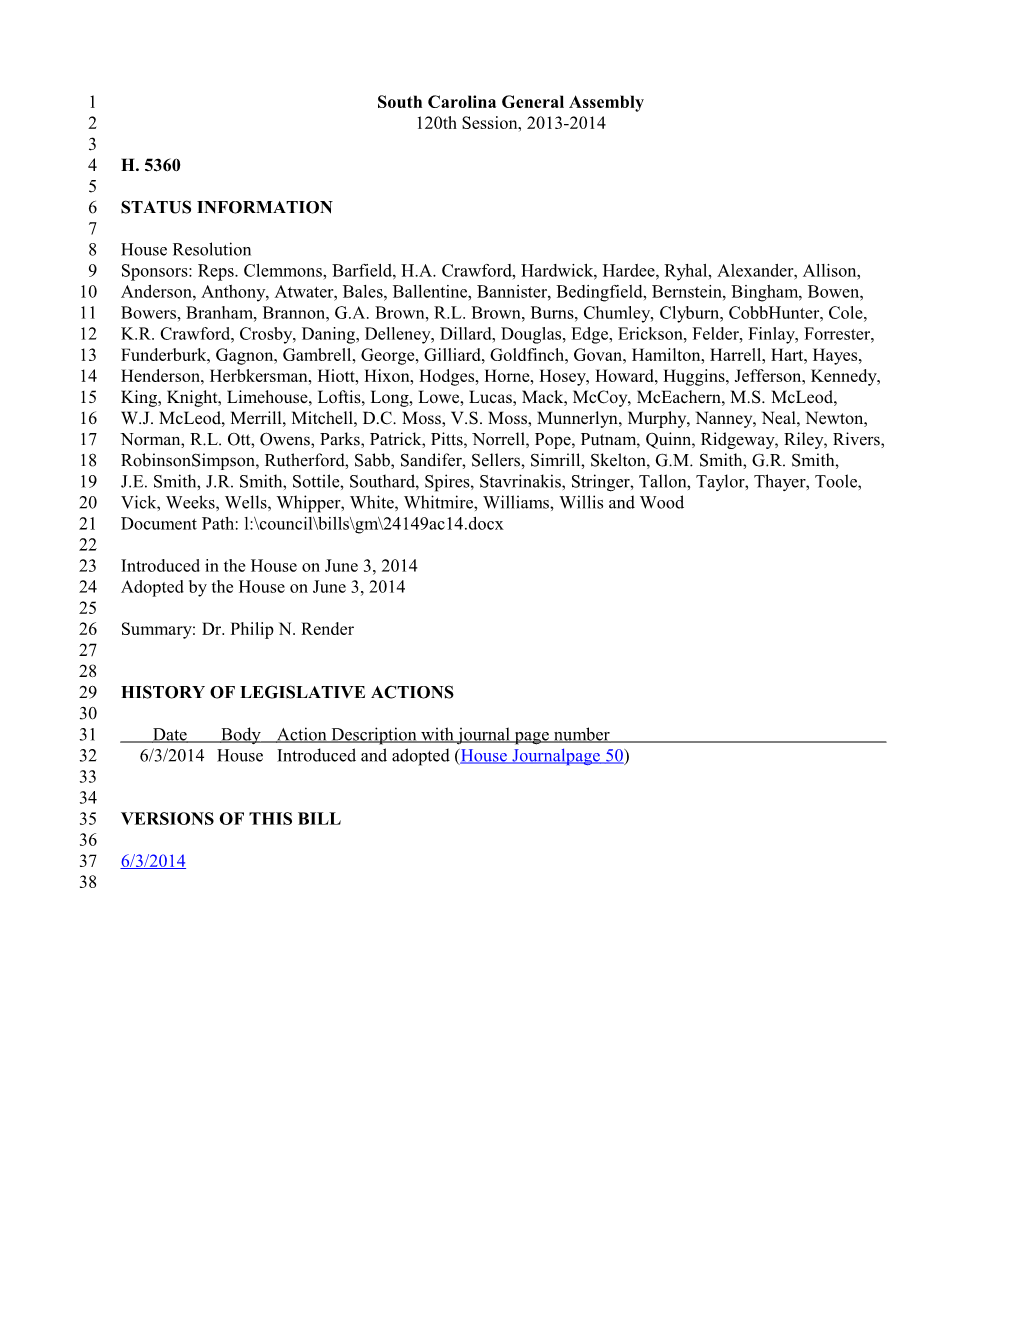 2013-2014 Bill 5360: Dr. Philip N. Render - South Carolina Legislature Online